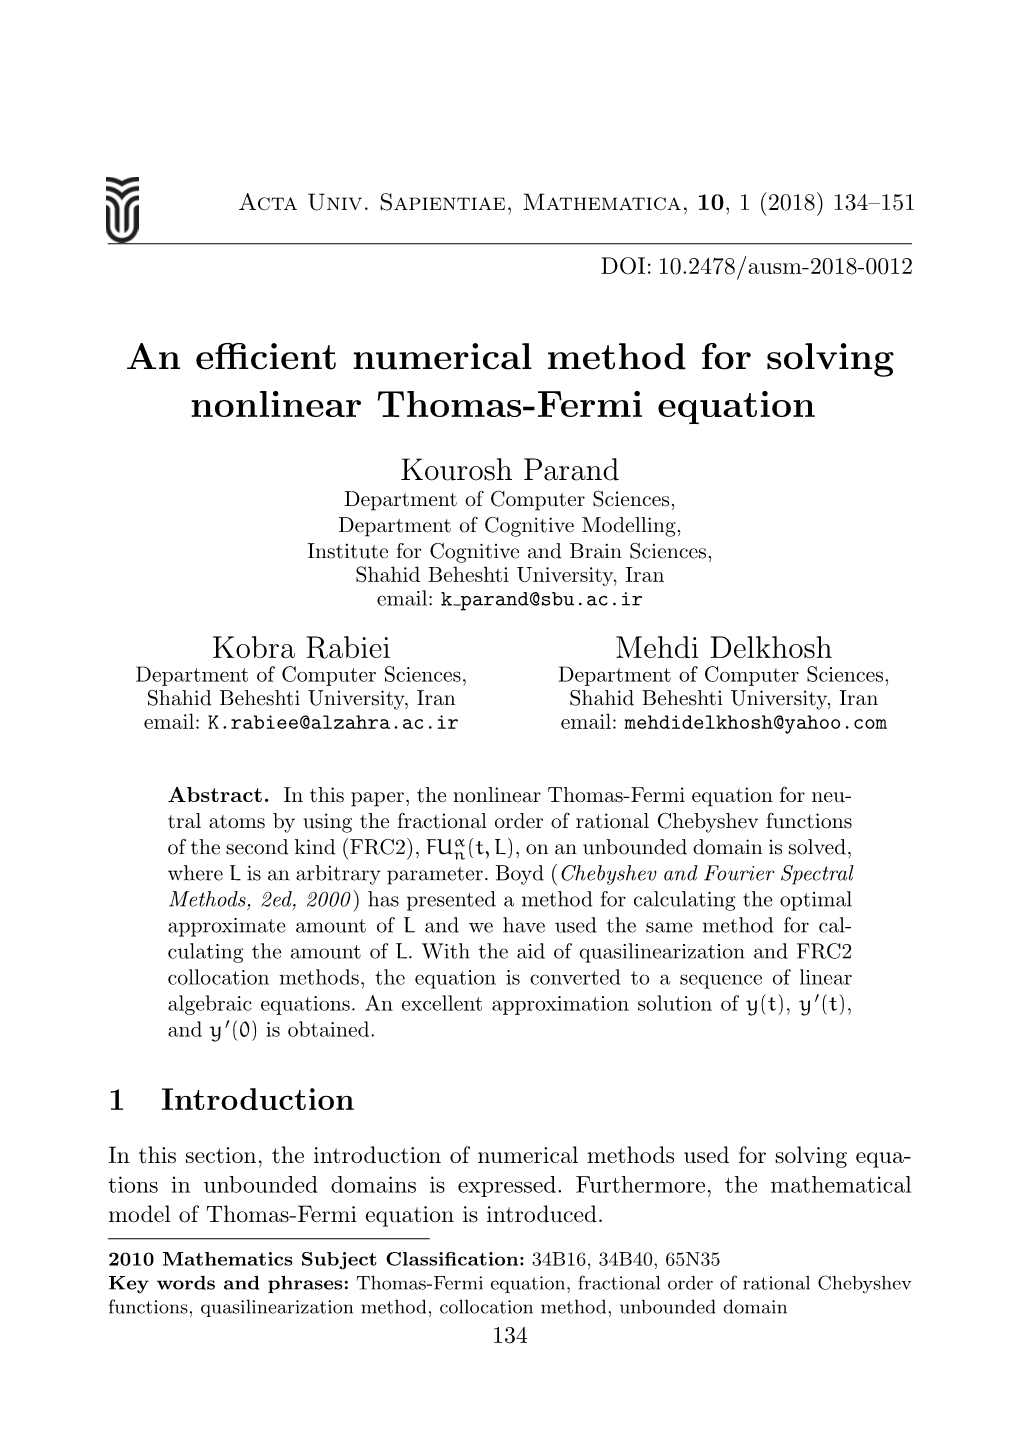 An Efficient Numerical Method for Solving Nonlinear Thomas-Fermi